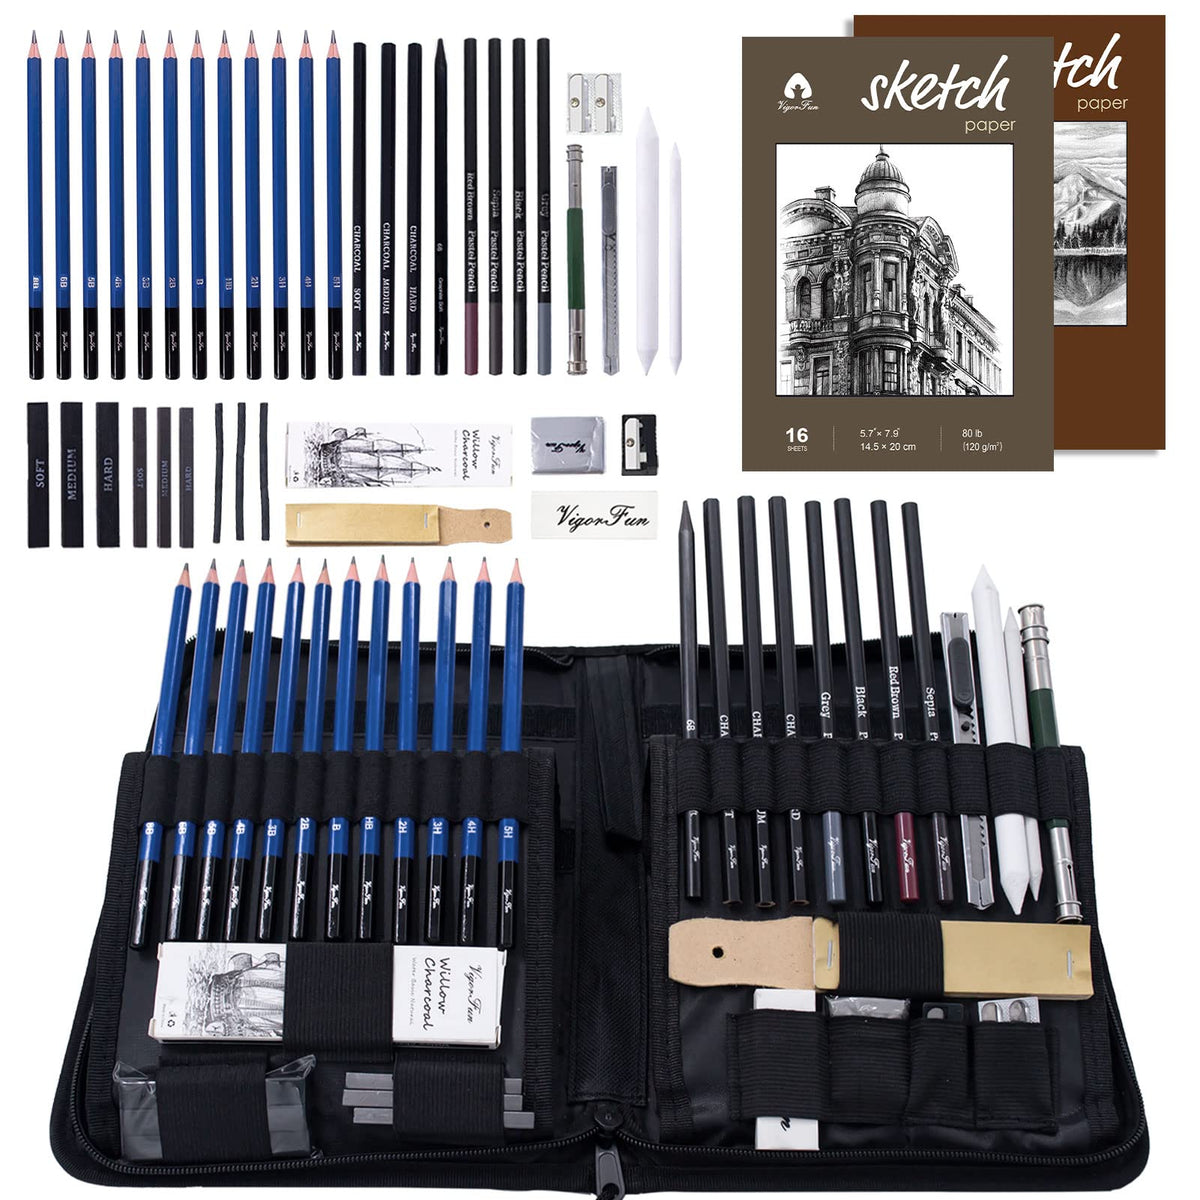 Yosogo 49- Piece Drawing & Sketching Pencils Set, Artist Kit Includes —  CHIMIYA